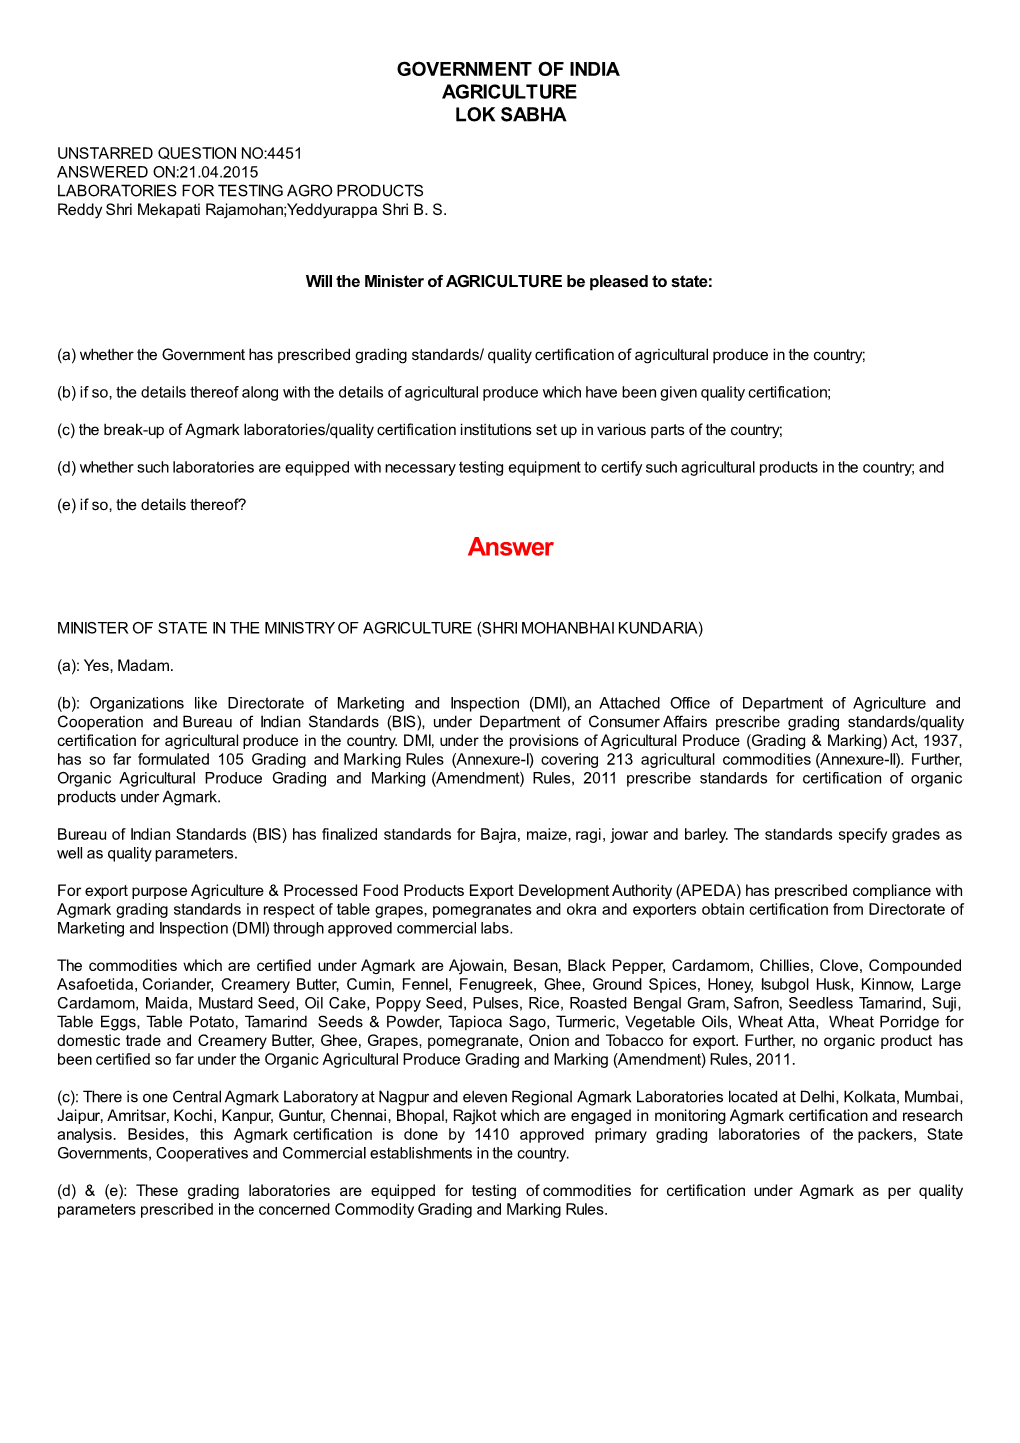 ANSWERED ON:21.04.2015 LABORATORIES for TESTING AGRO PRODUCTS Reddy Shri Mekapati Rajamohan;Yeddyurappa Shri B